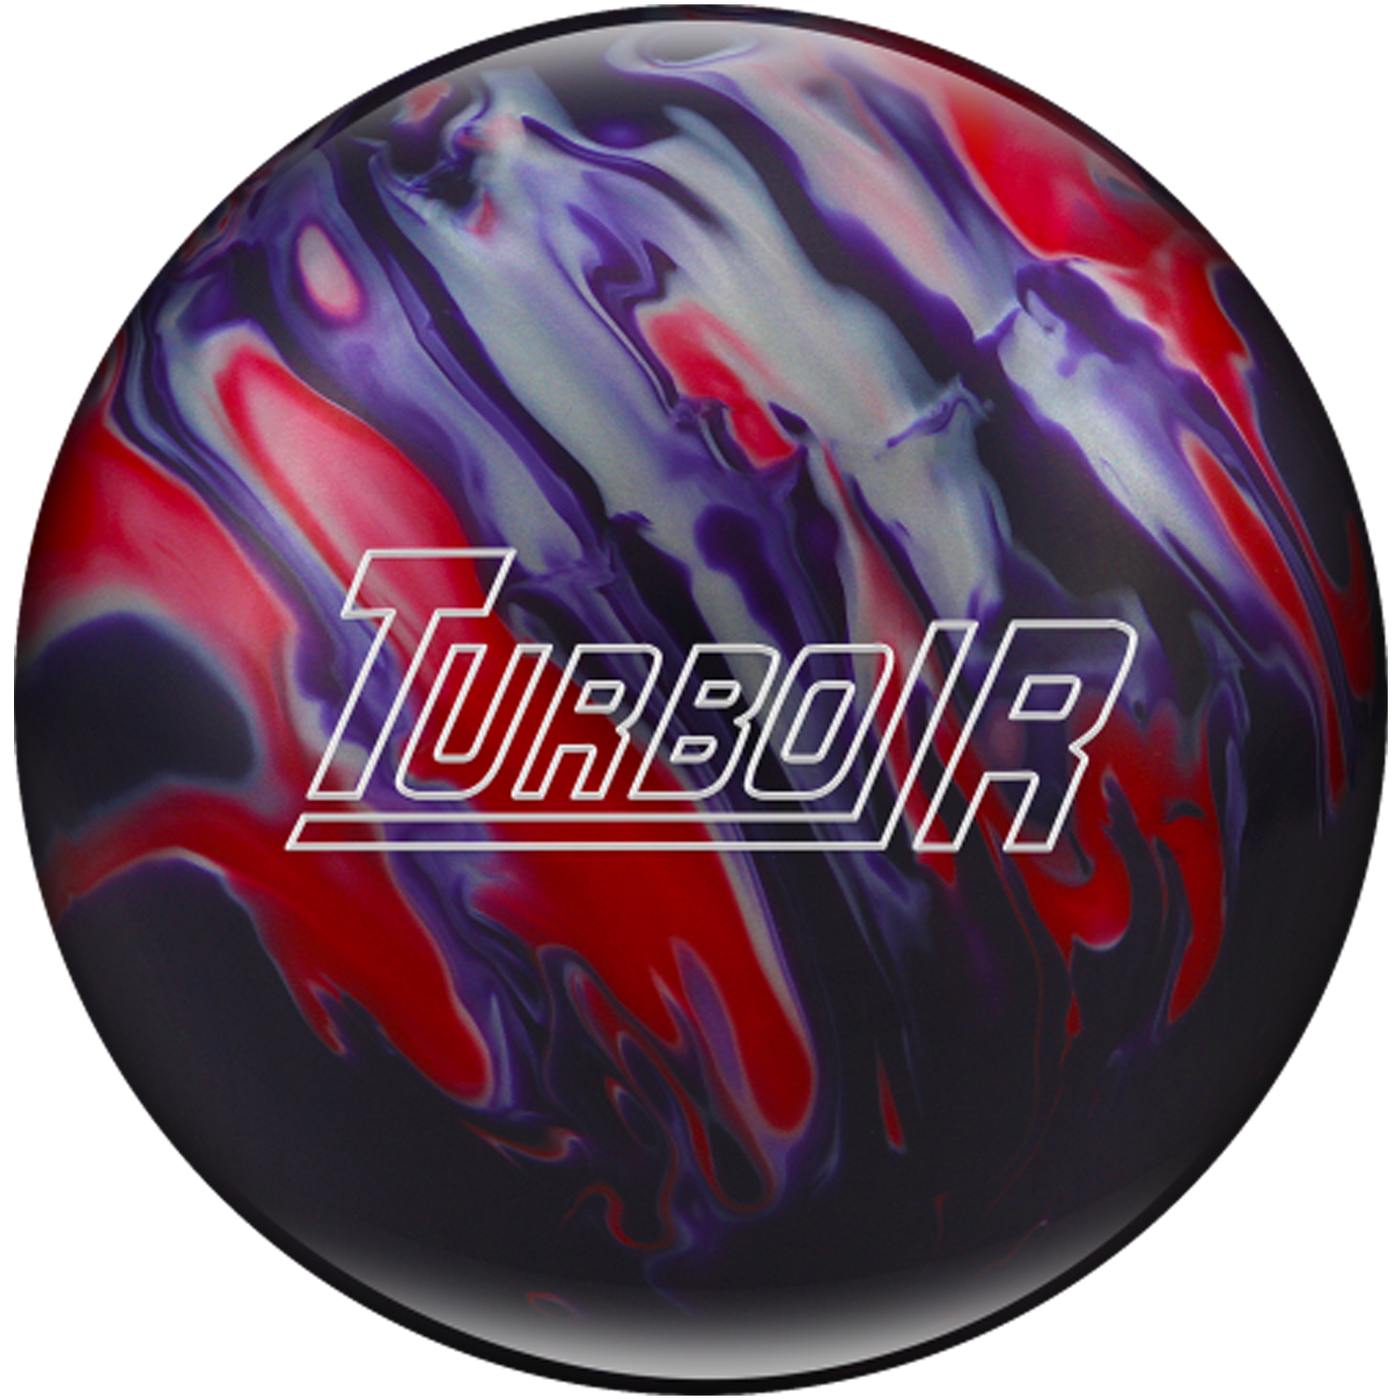 Turbo/R Purple/Red/Silver Bowling Ball